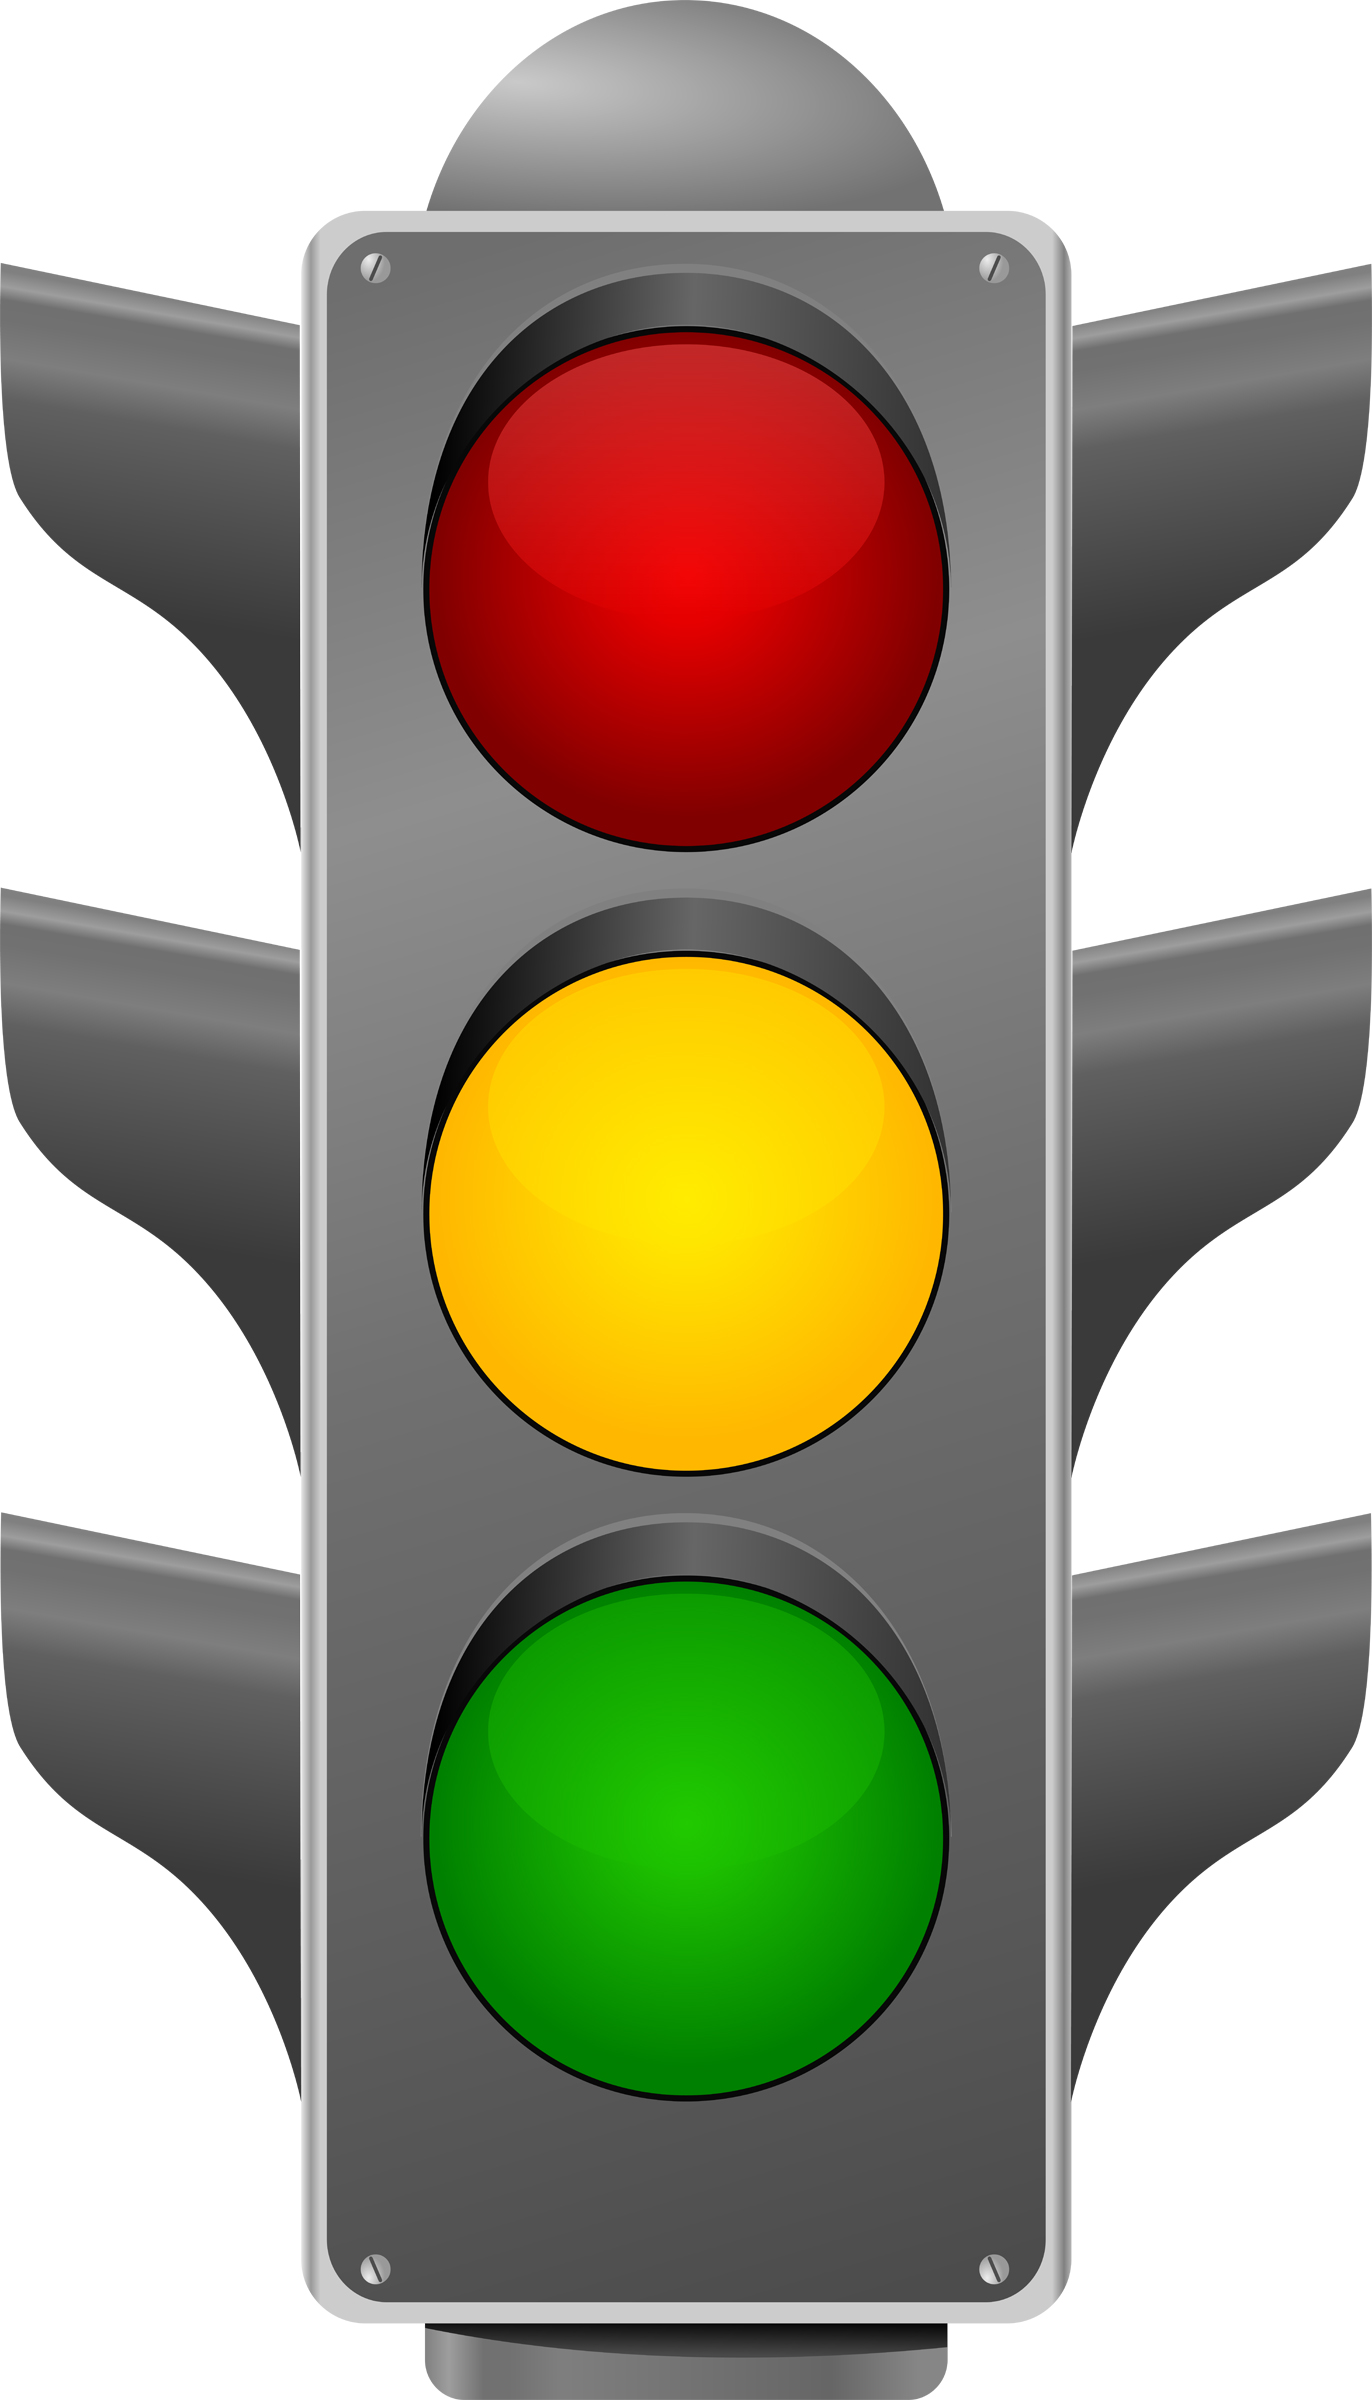 Stoplight Traffic Light Clipart Image Clipartbarn